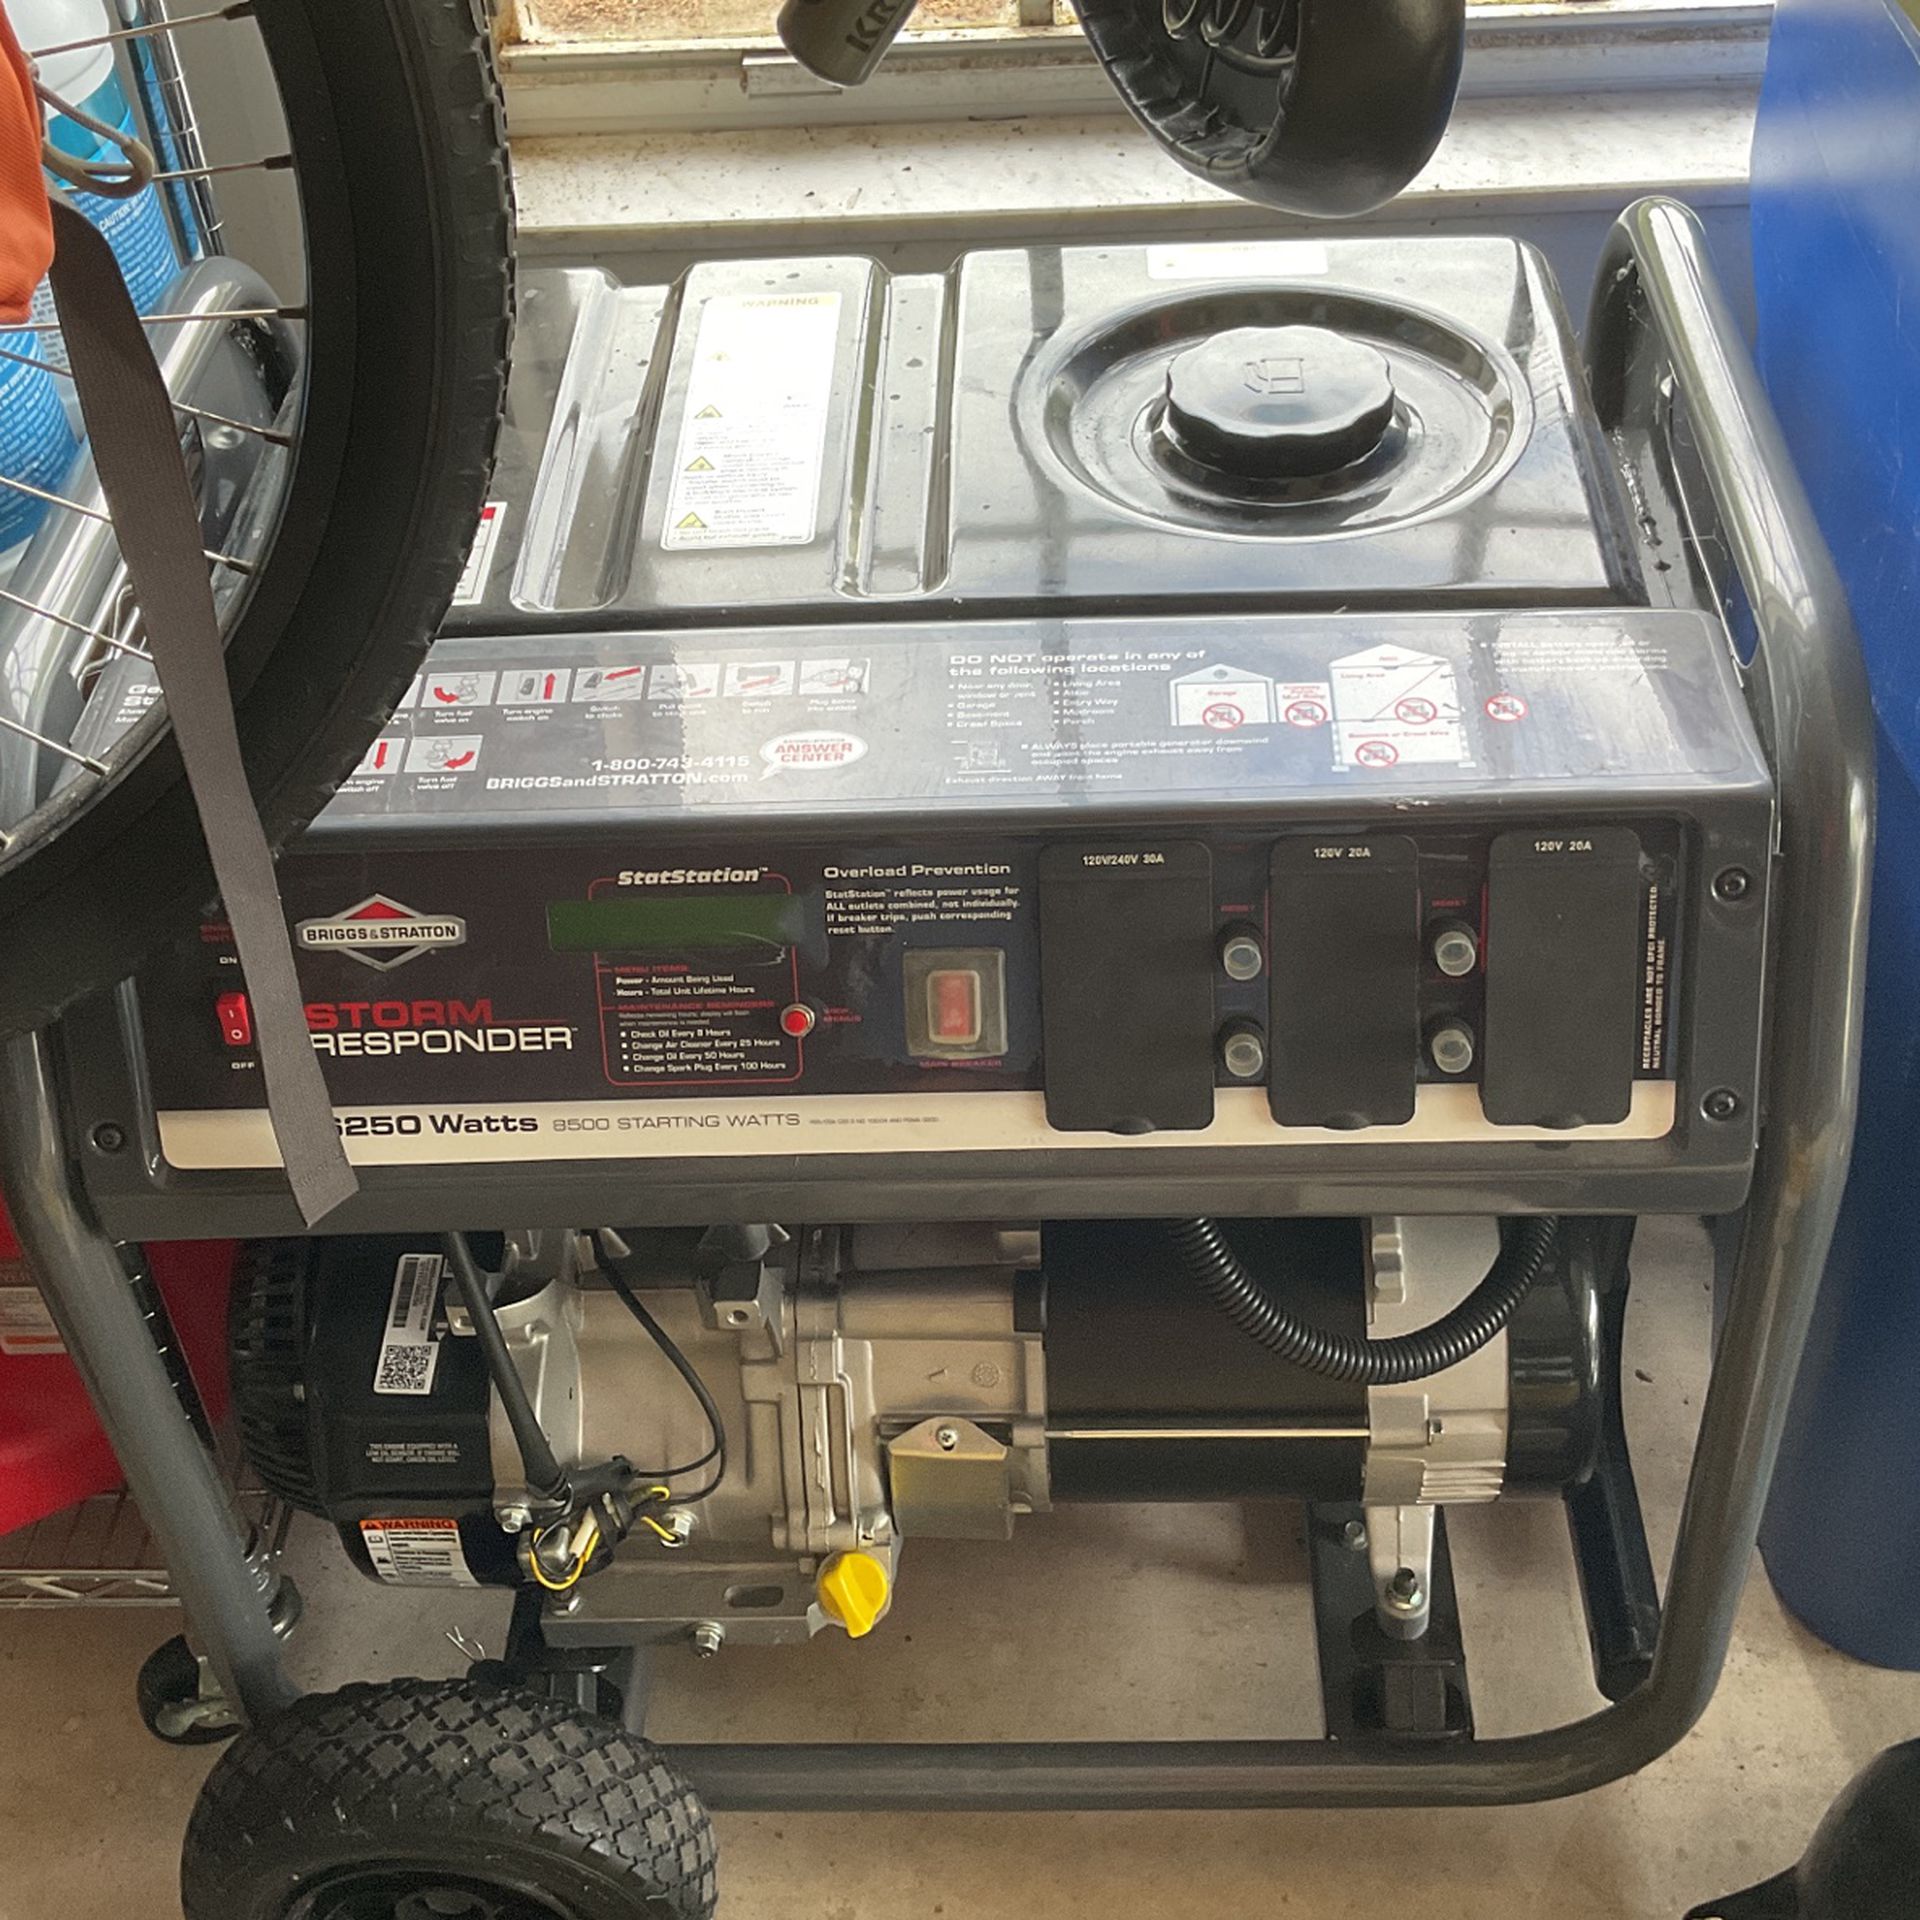 Briggs & Stratton Storm responder 6,250 Watt Portable Generator